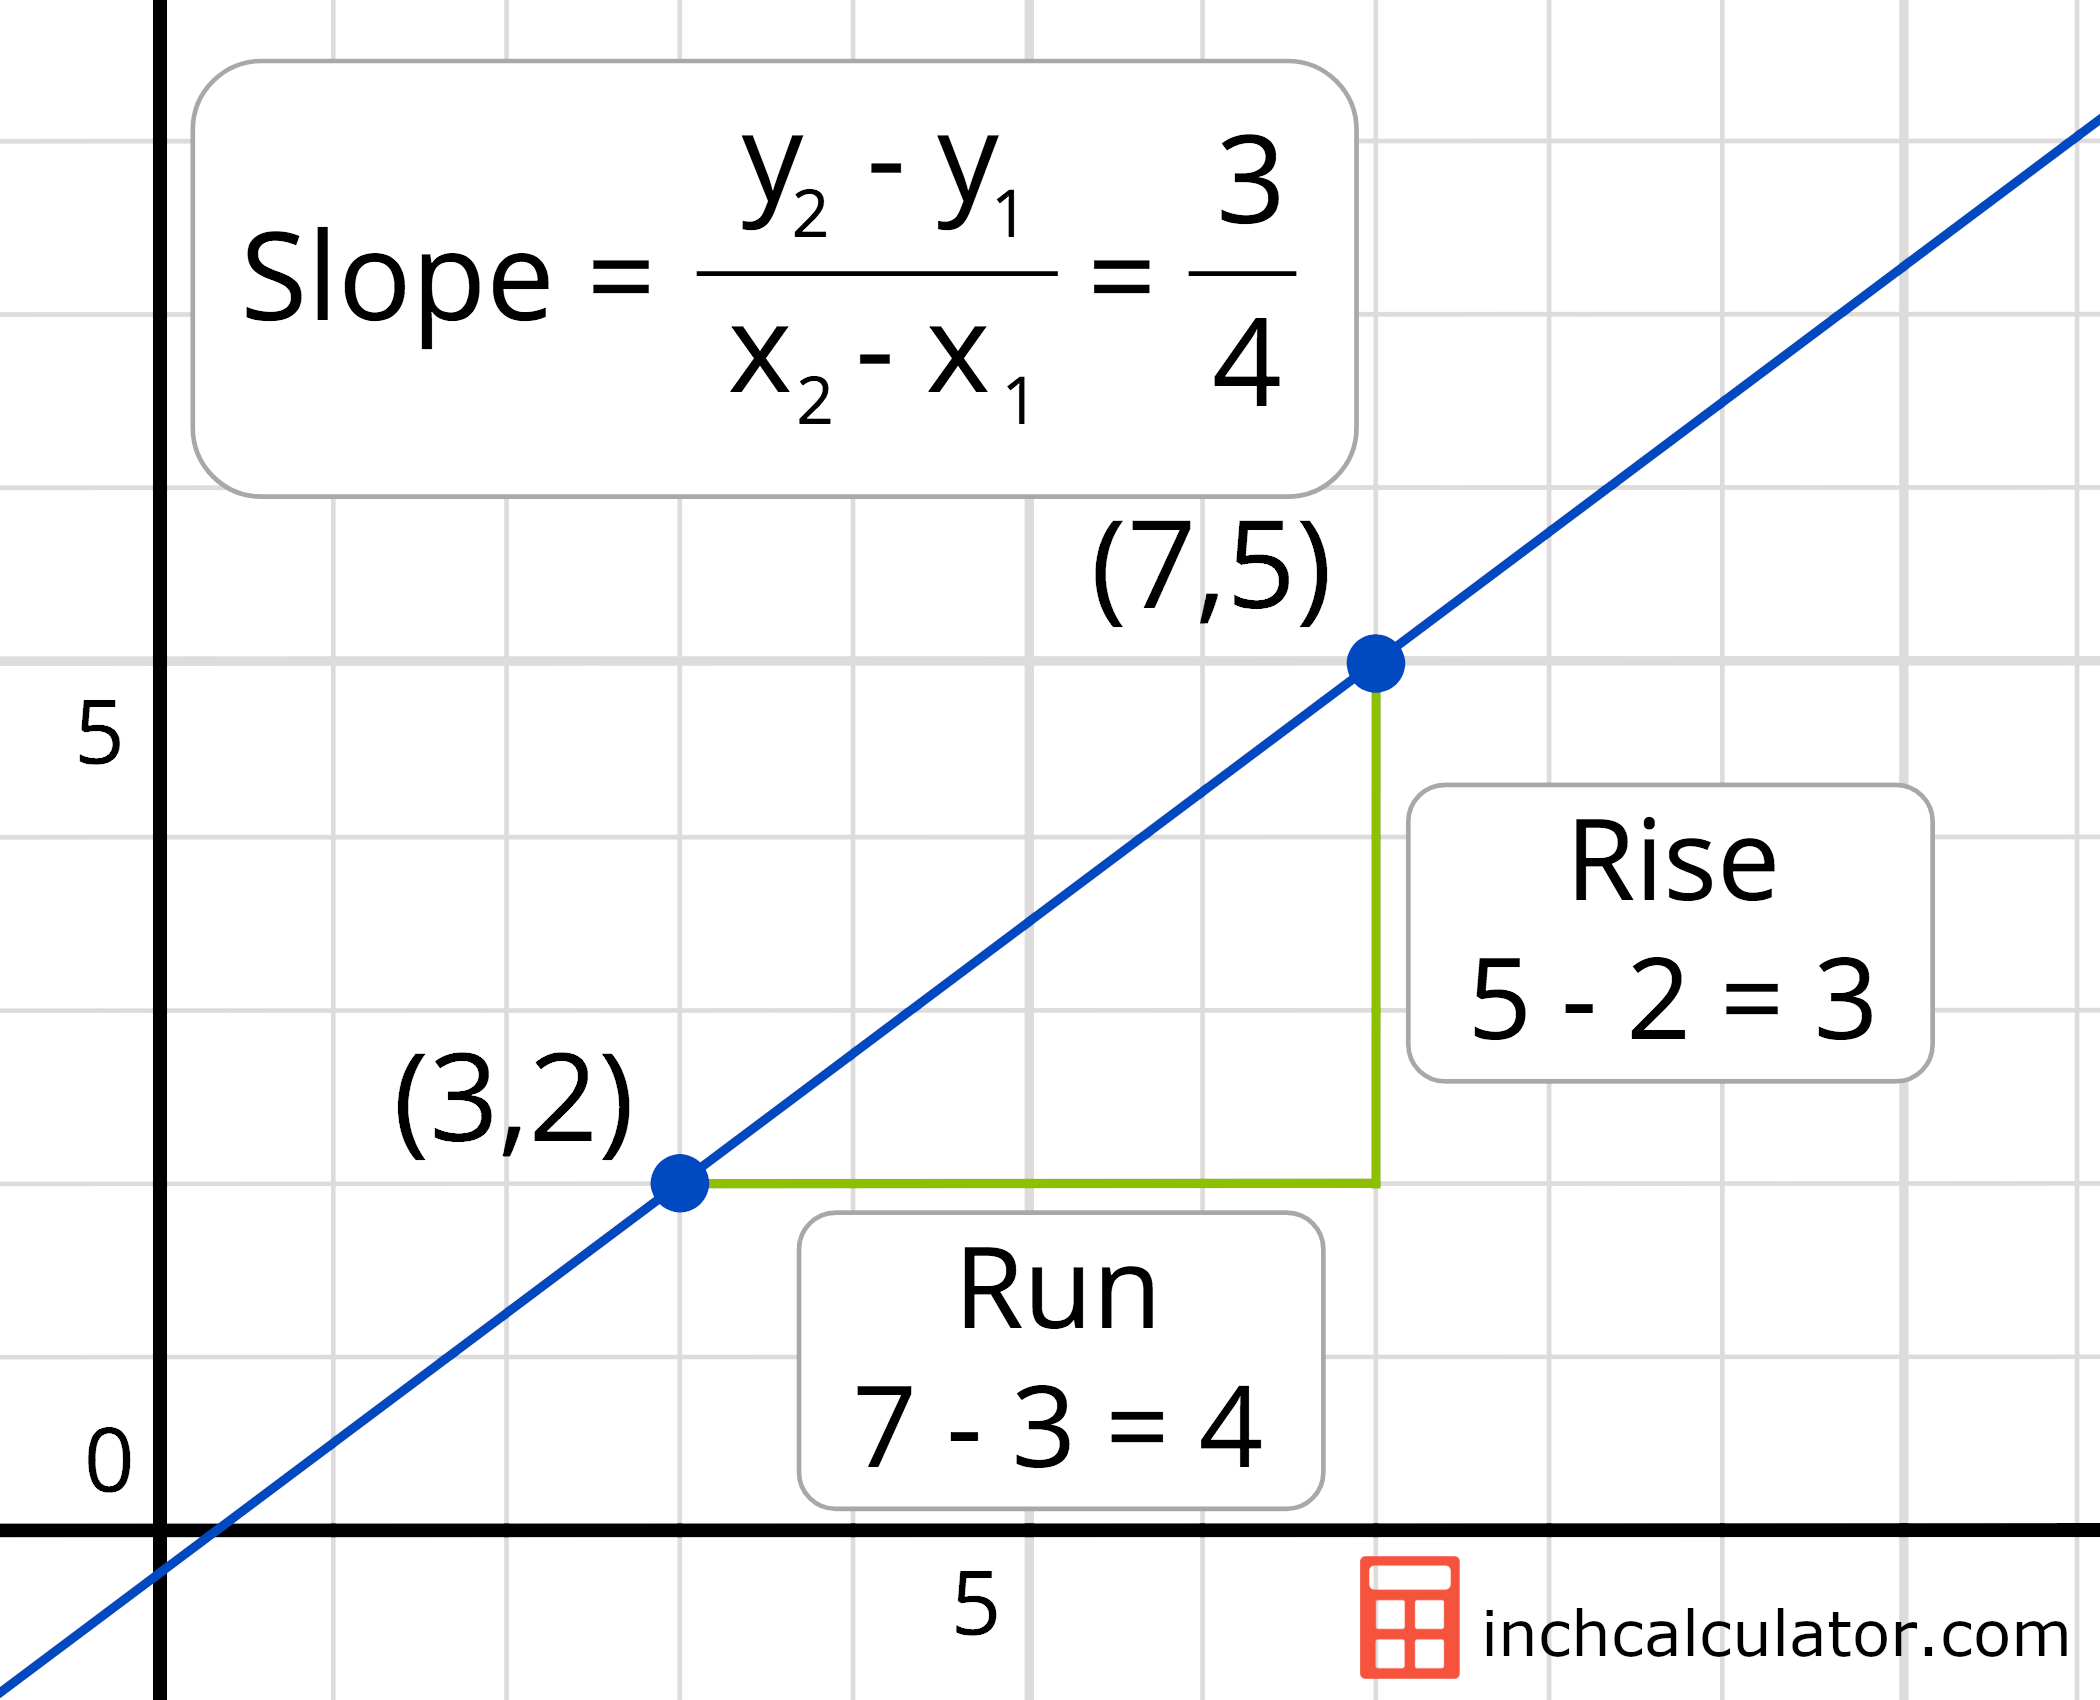 point slope intercept form calculator